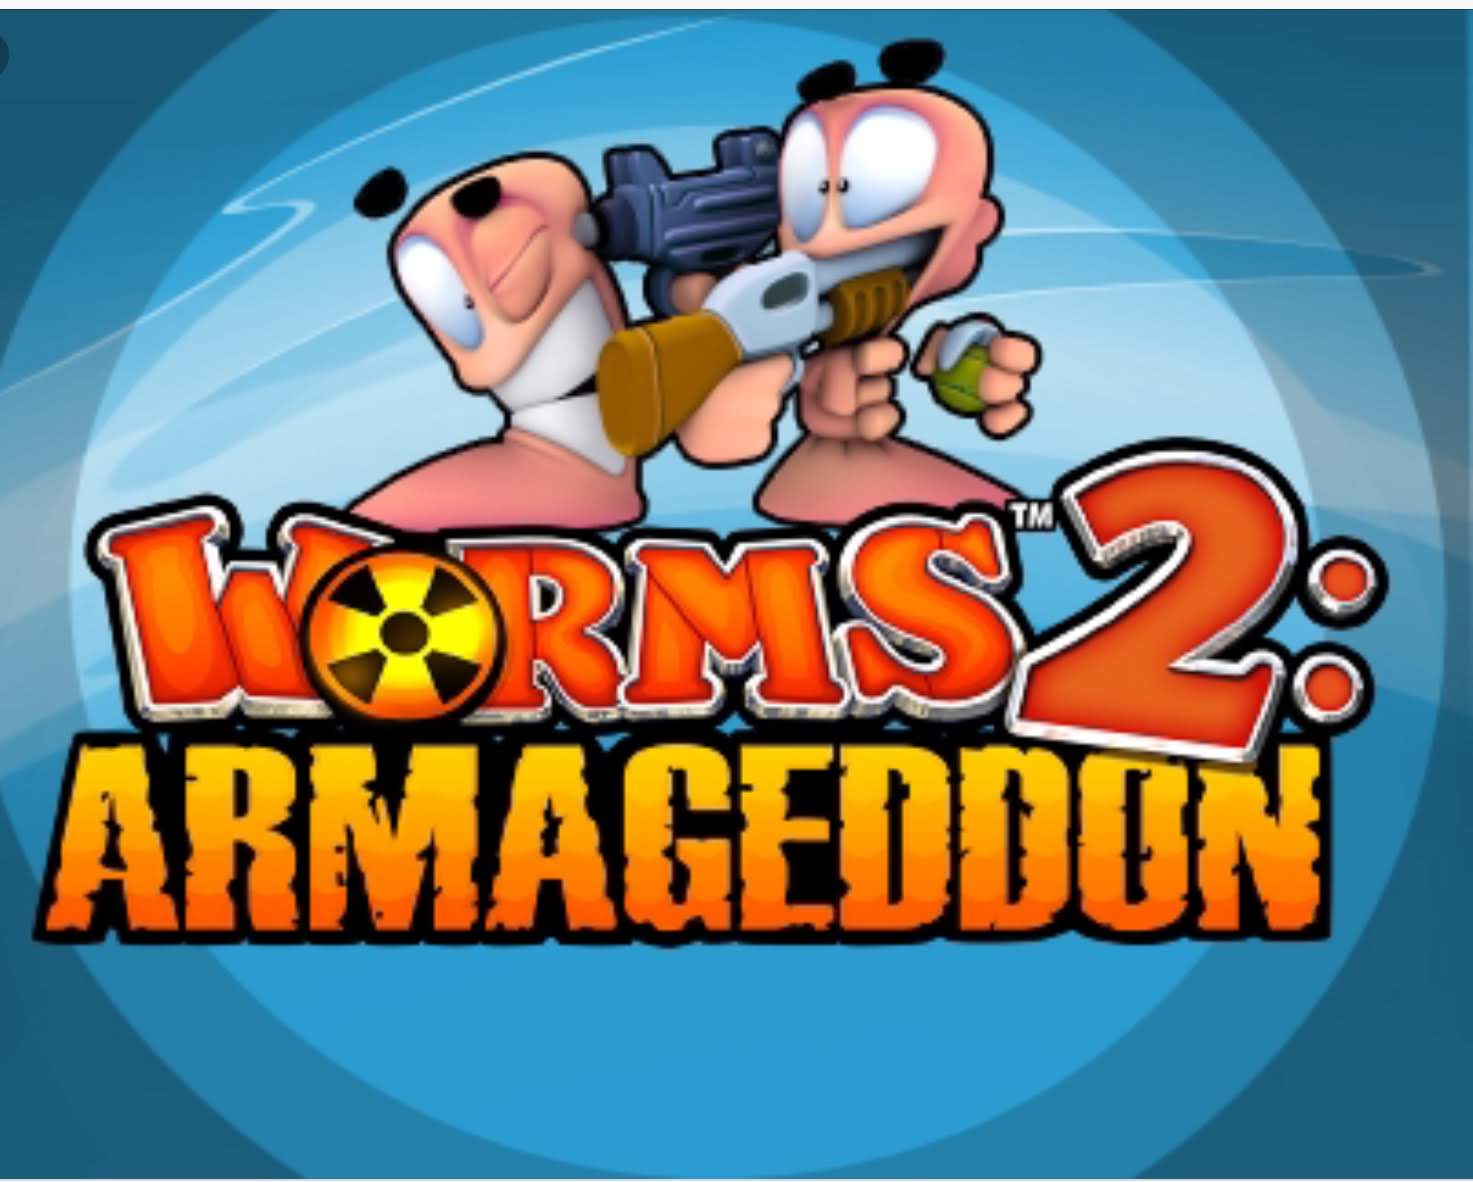 Worms armageddon on steam фото 96